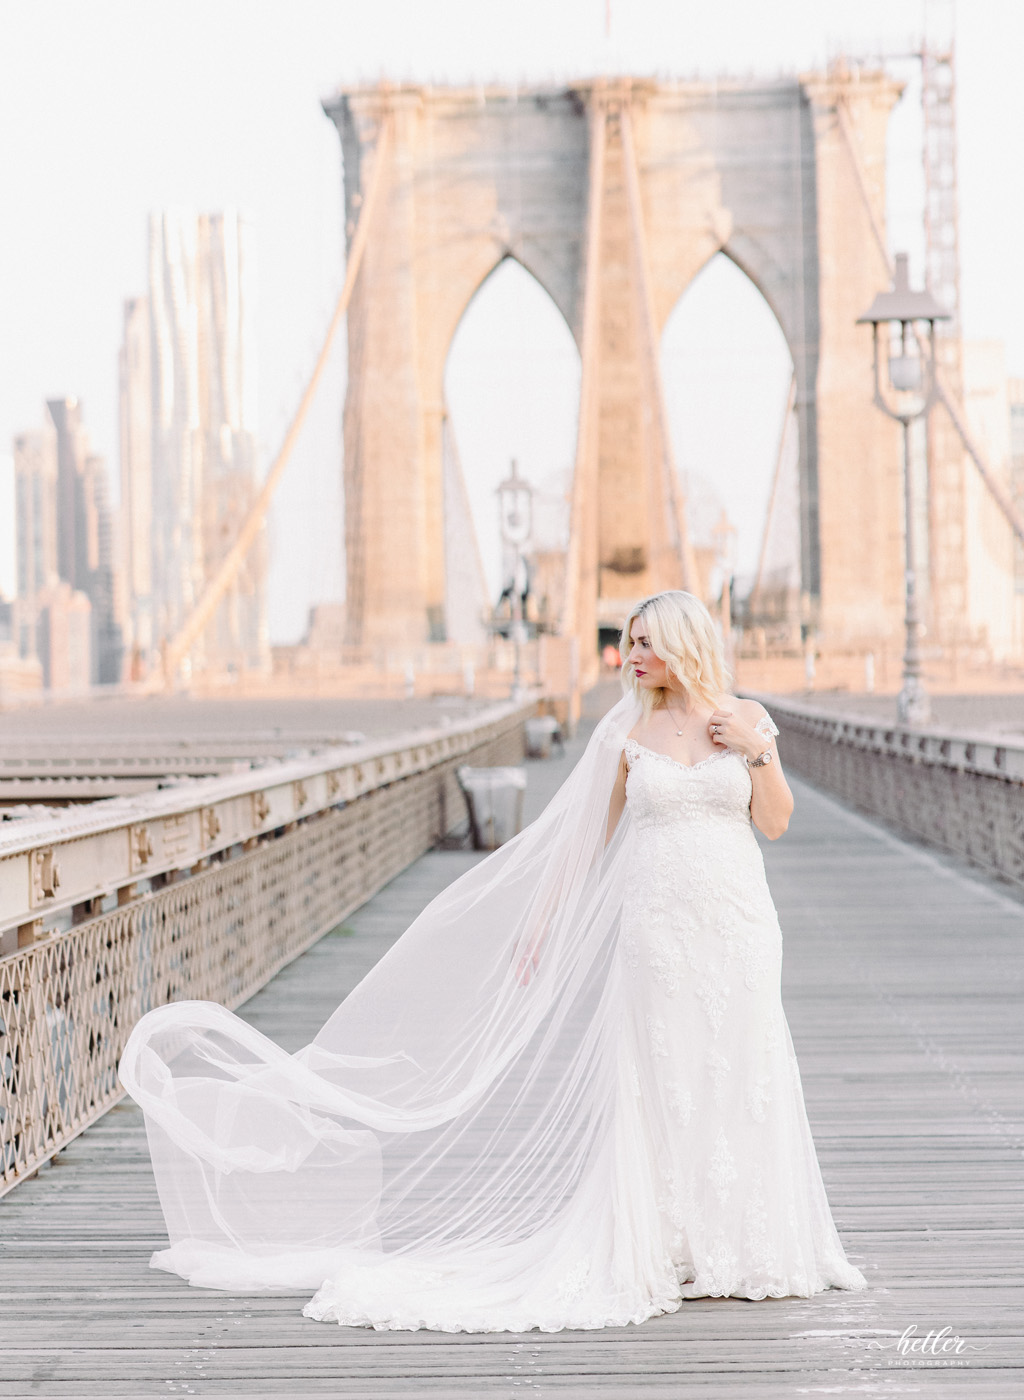 New York City wedding photos at The Brooklyn Bridge at sunrise